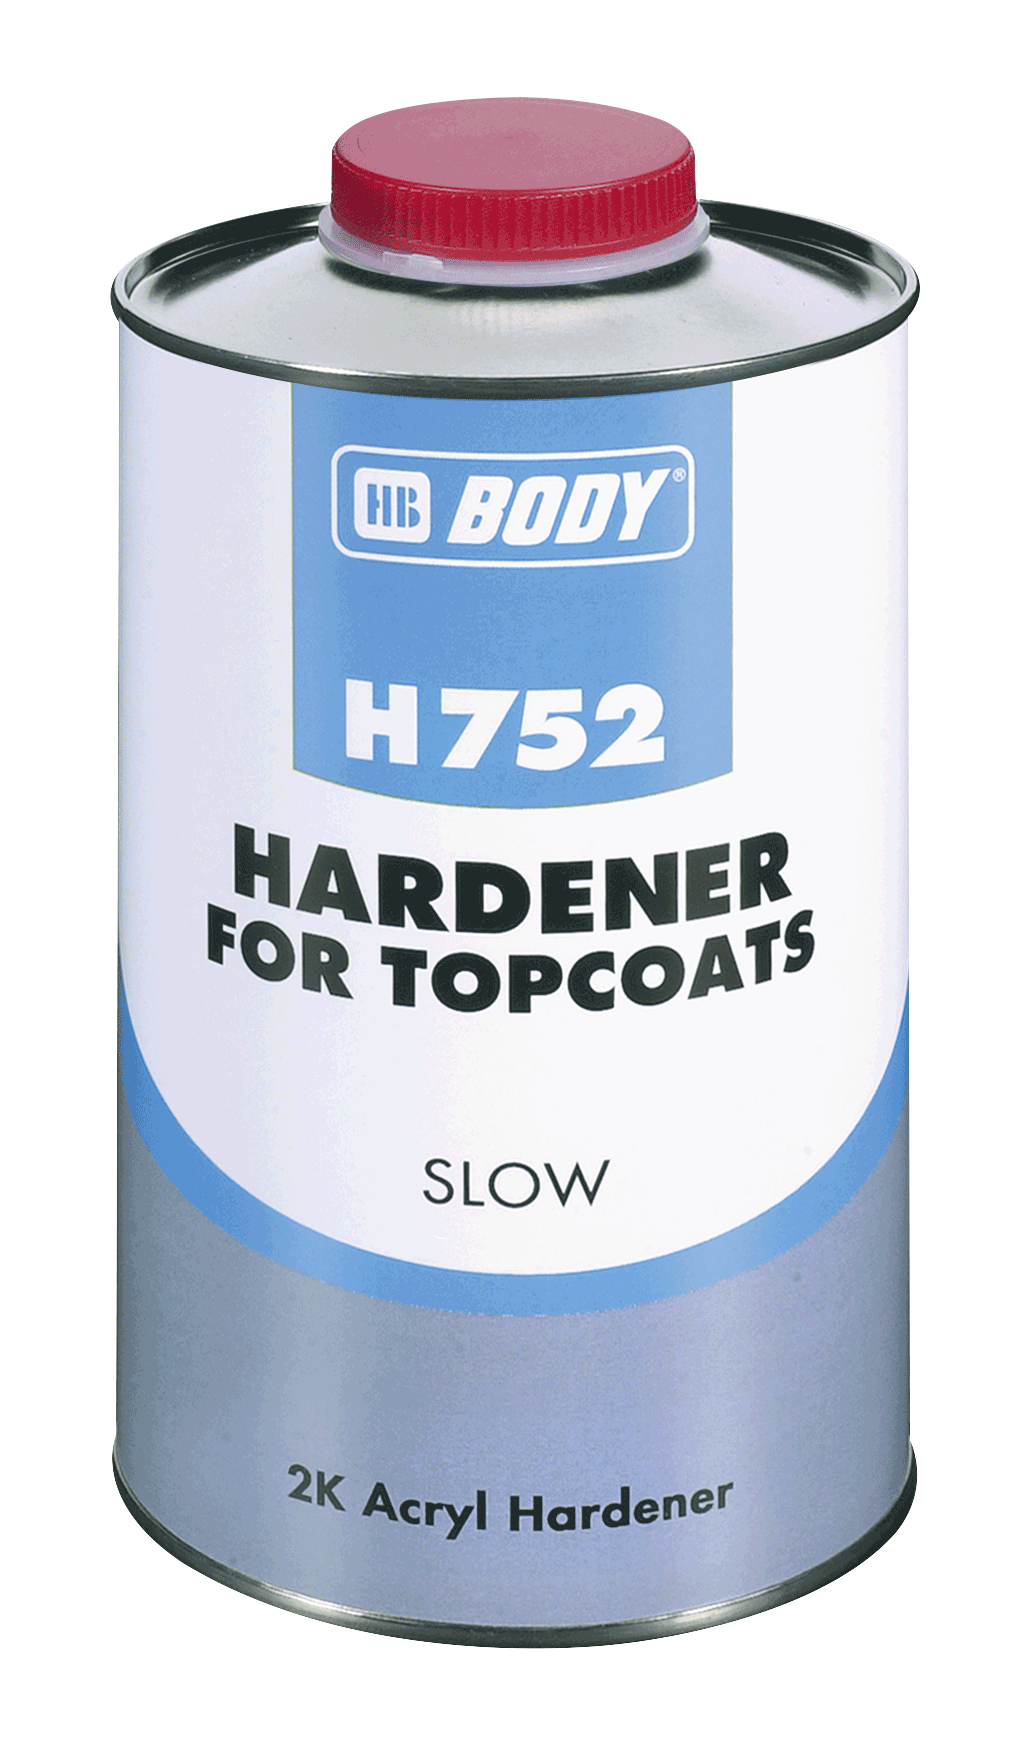 E-shop HB BODY Body 752 Hardener slow 1L